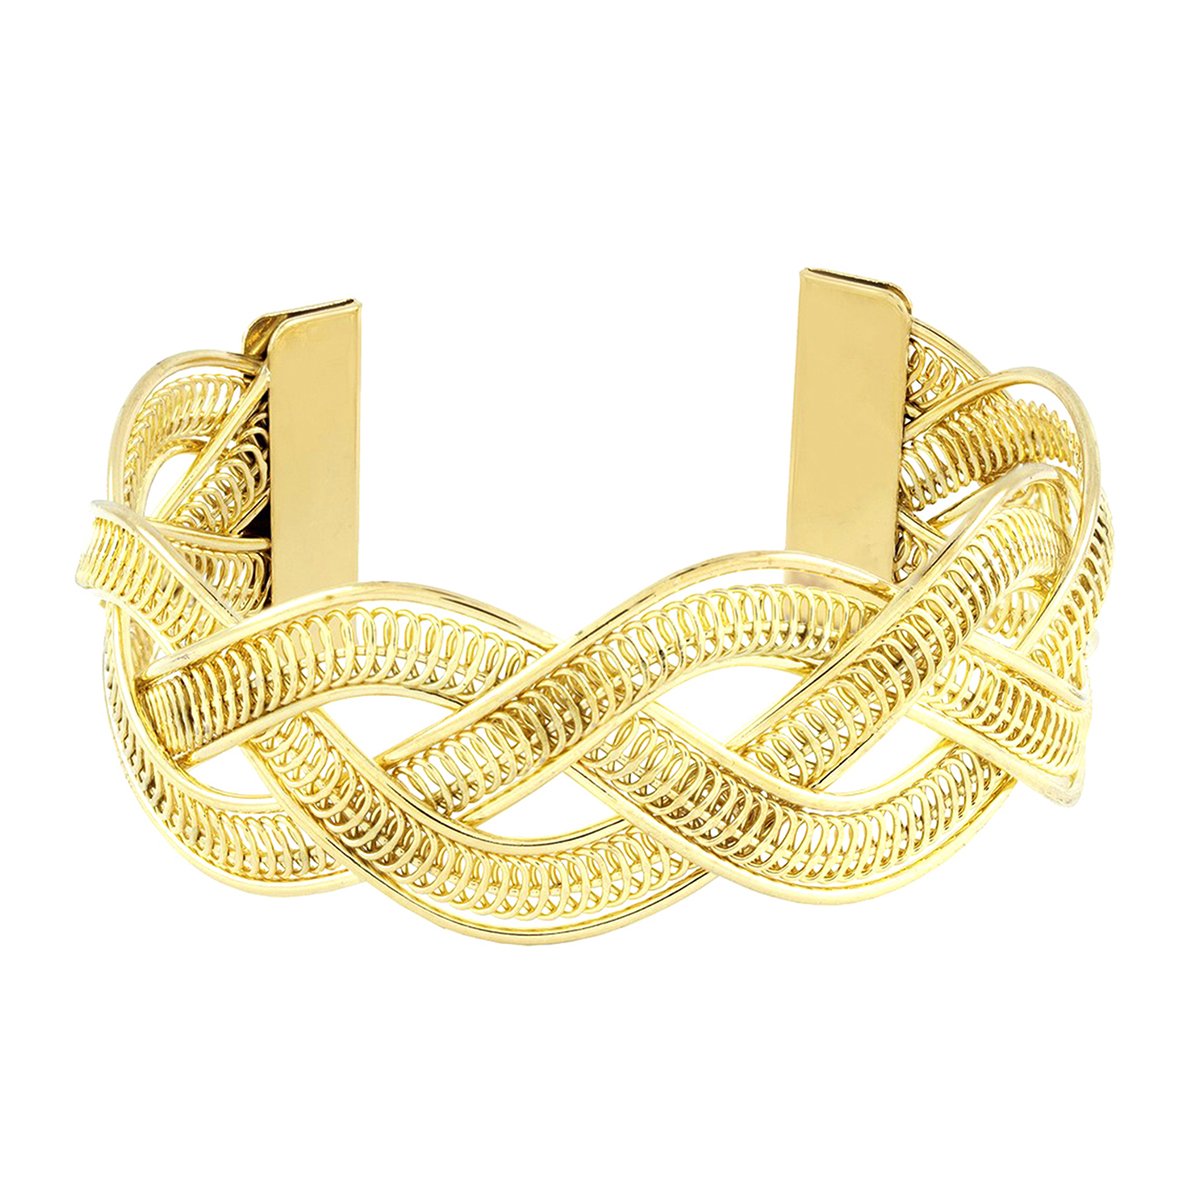 brass cuff bracelet products for sale  eBay